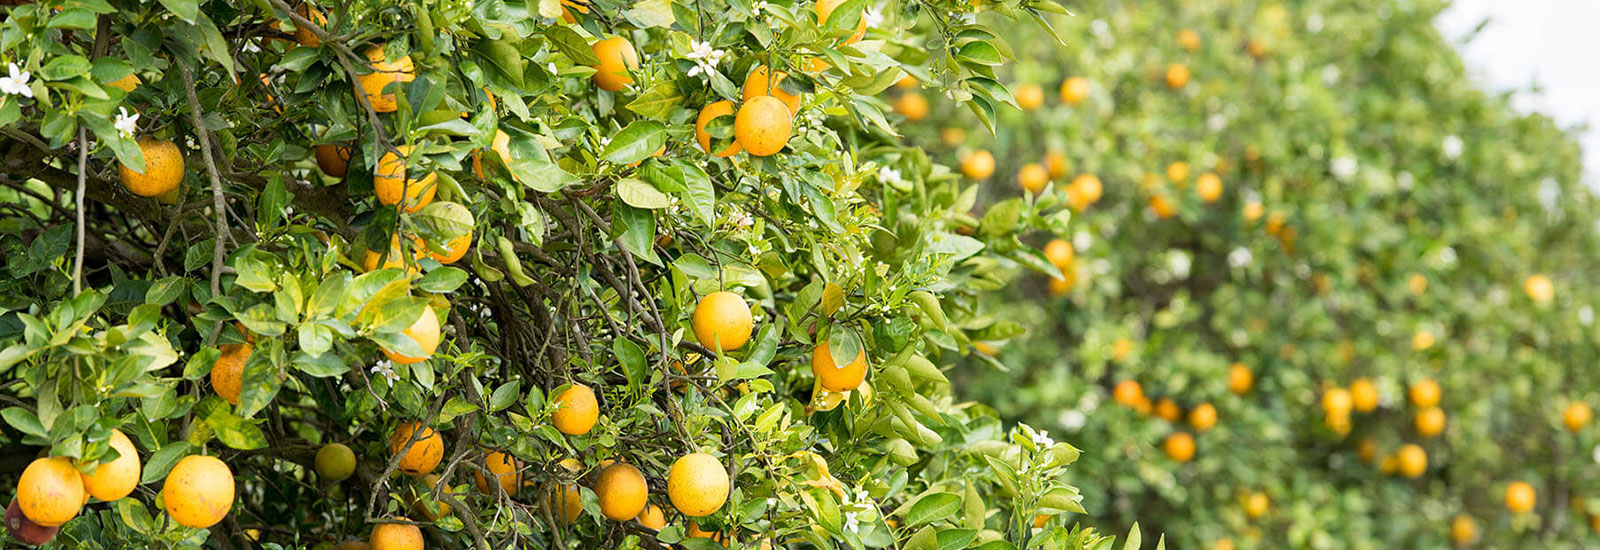 Continued funding for the mature citrus facility to produce disease tolerant, transgenic citrus